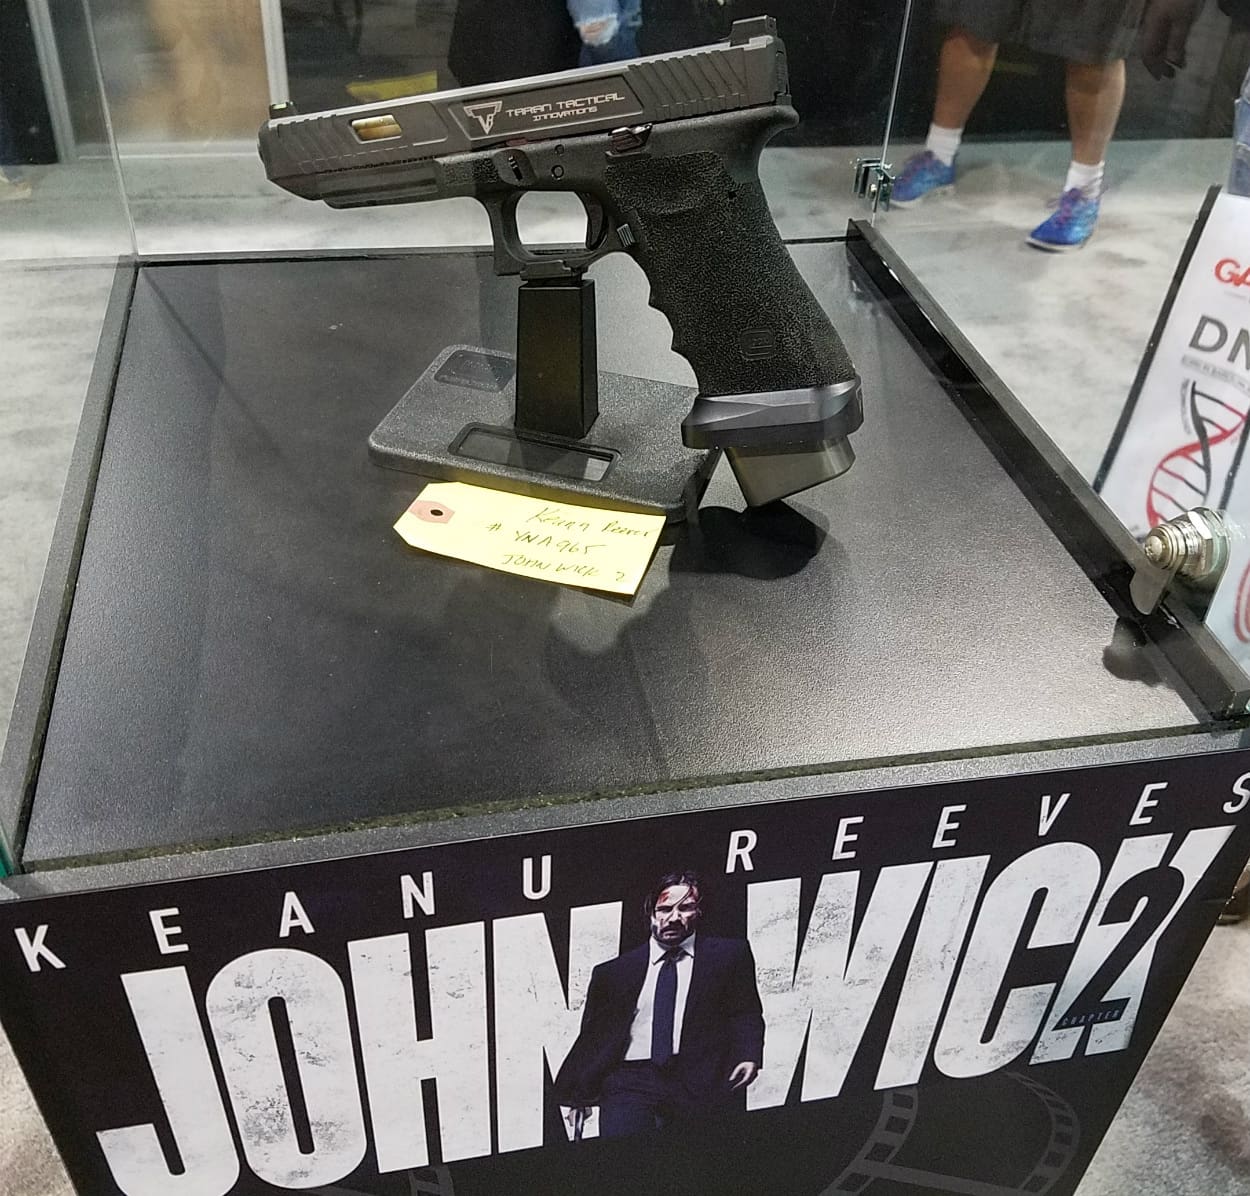 John Wick has good taste. : guns